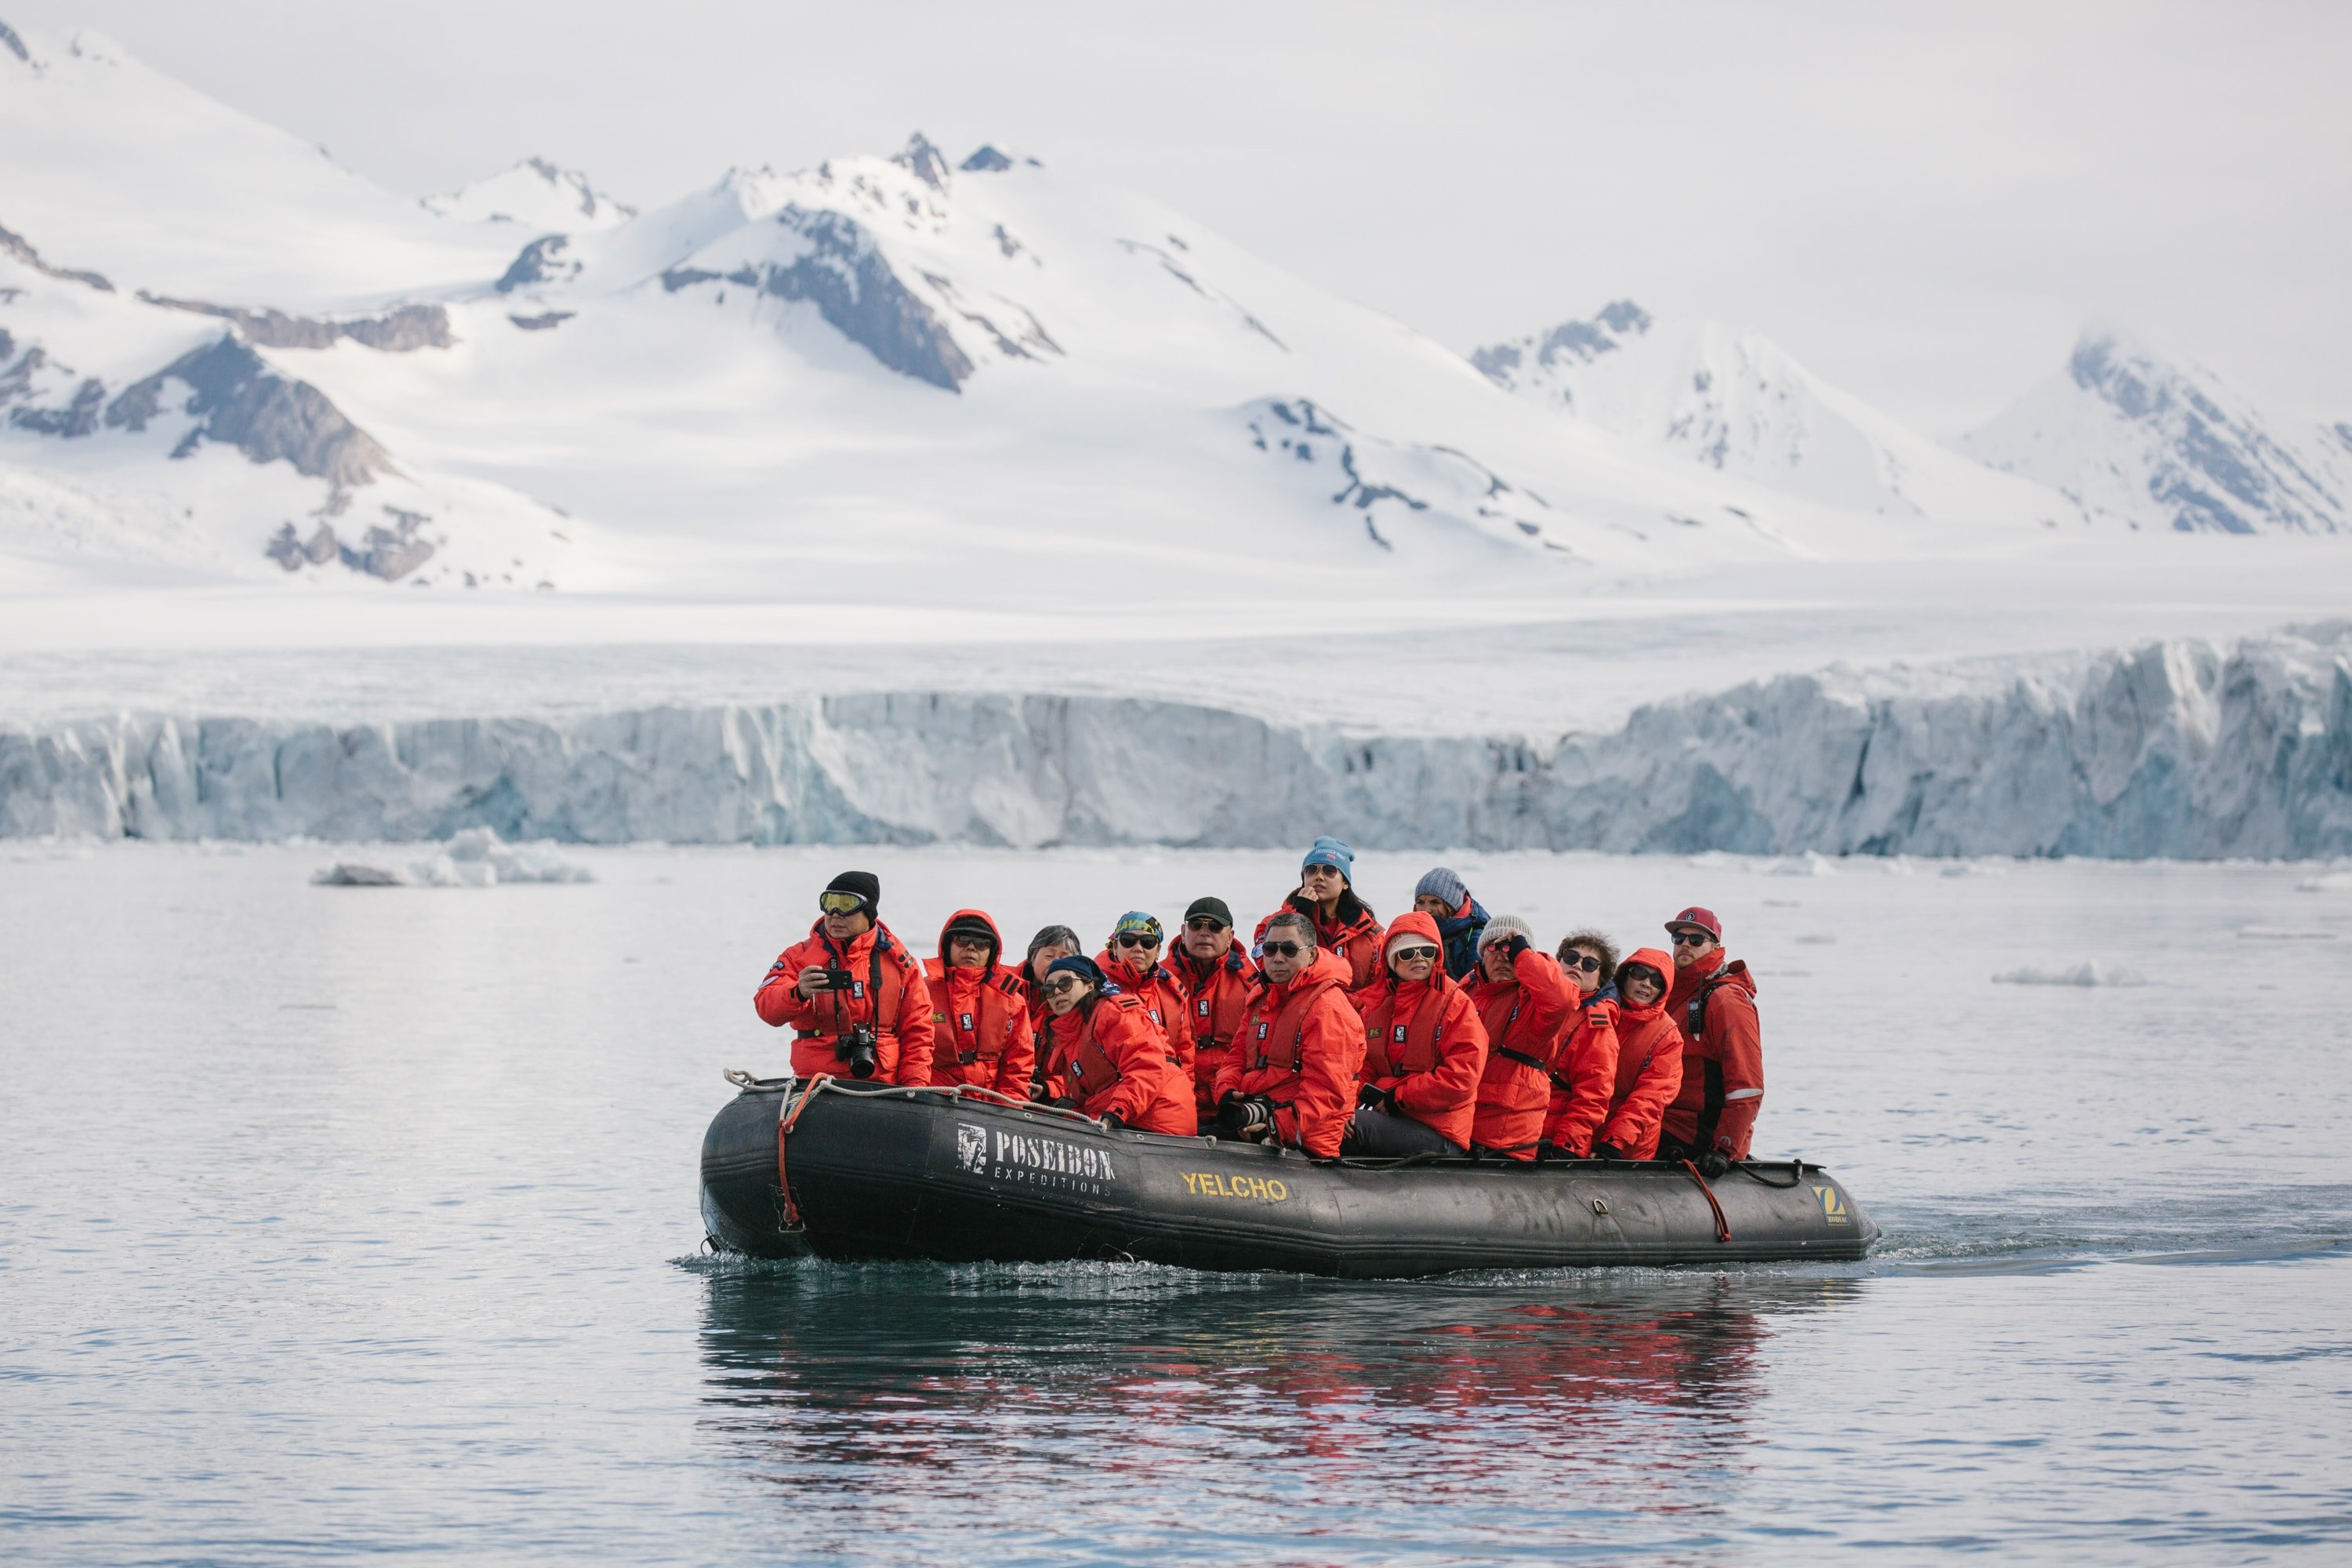 Polar cruise passengers in a Zodiac